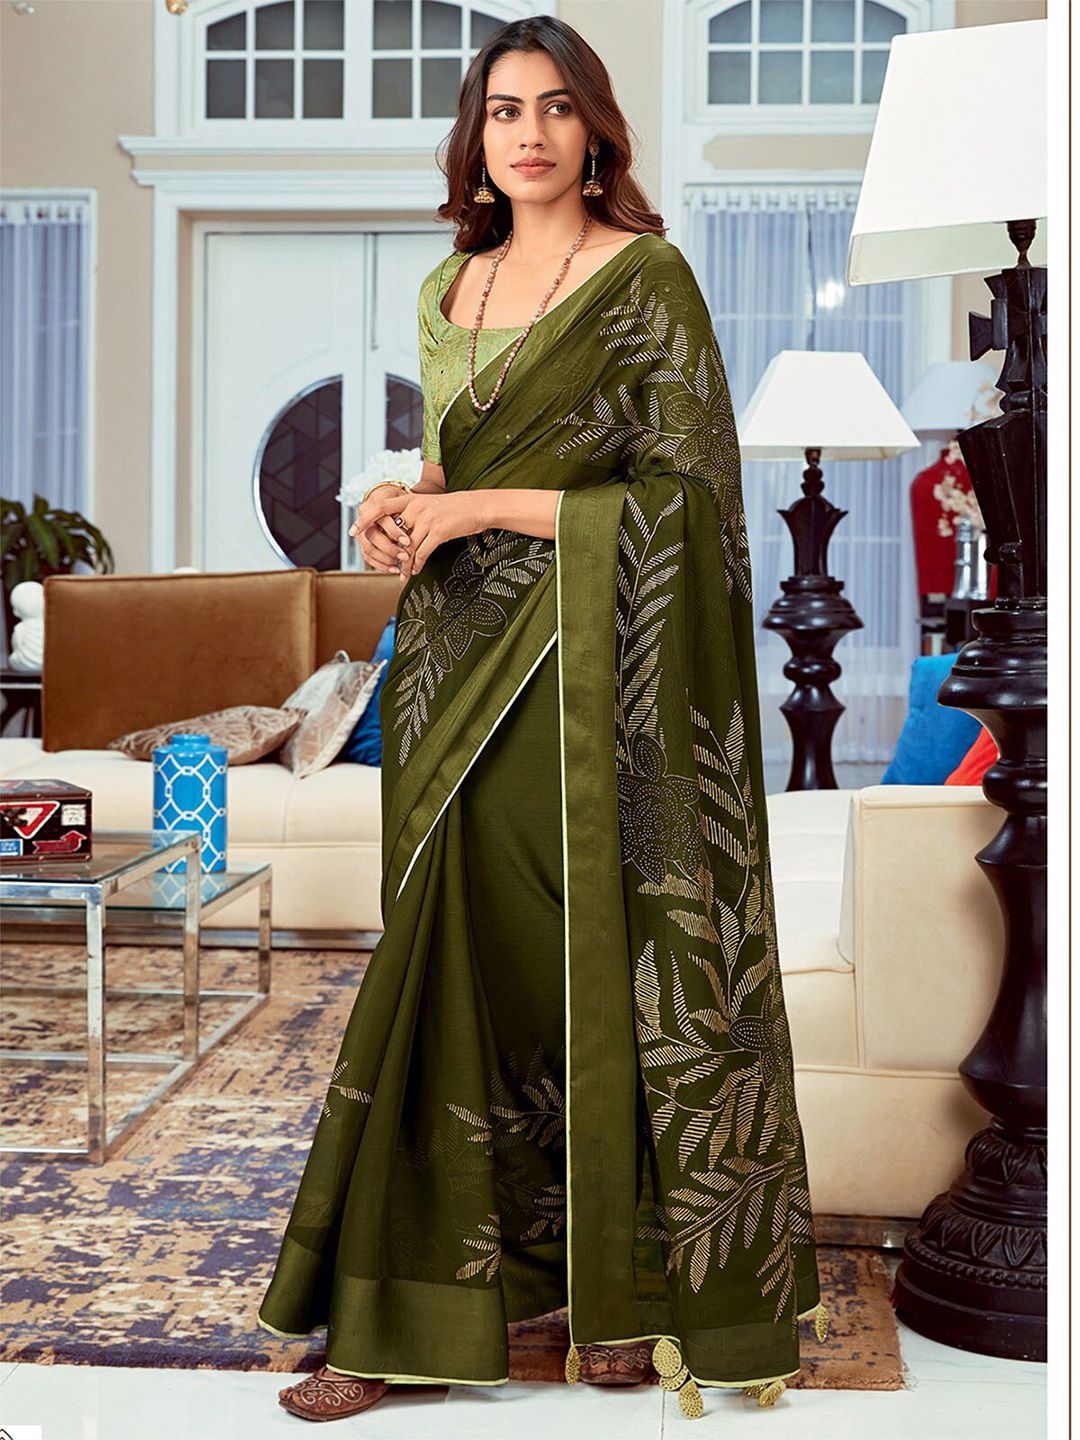 ODETTE Olive Green & Beige Floral Silk Blend Saree Price in India